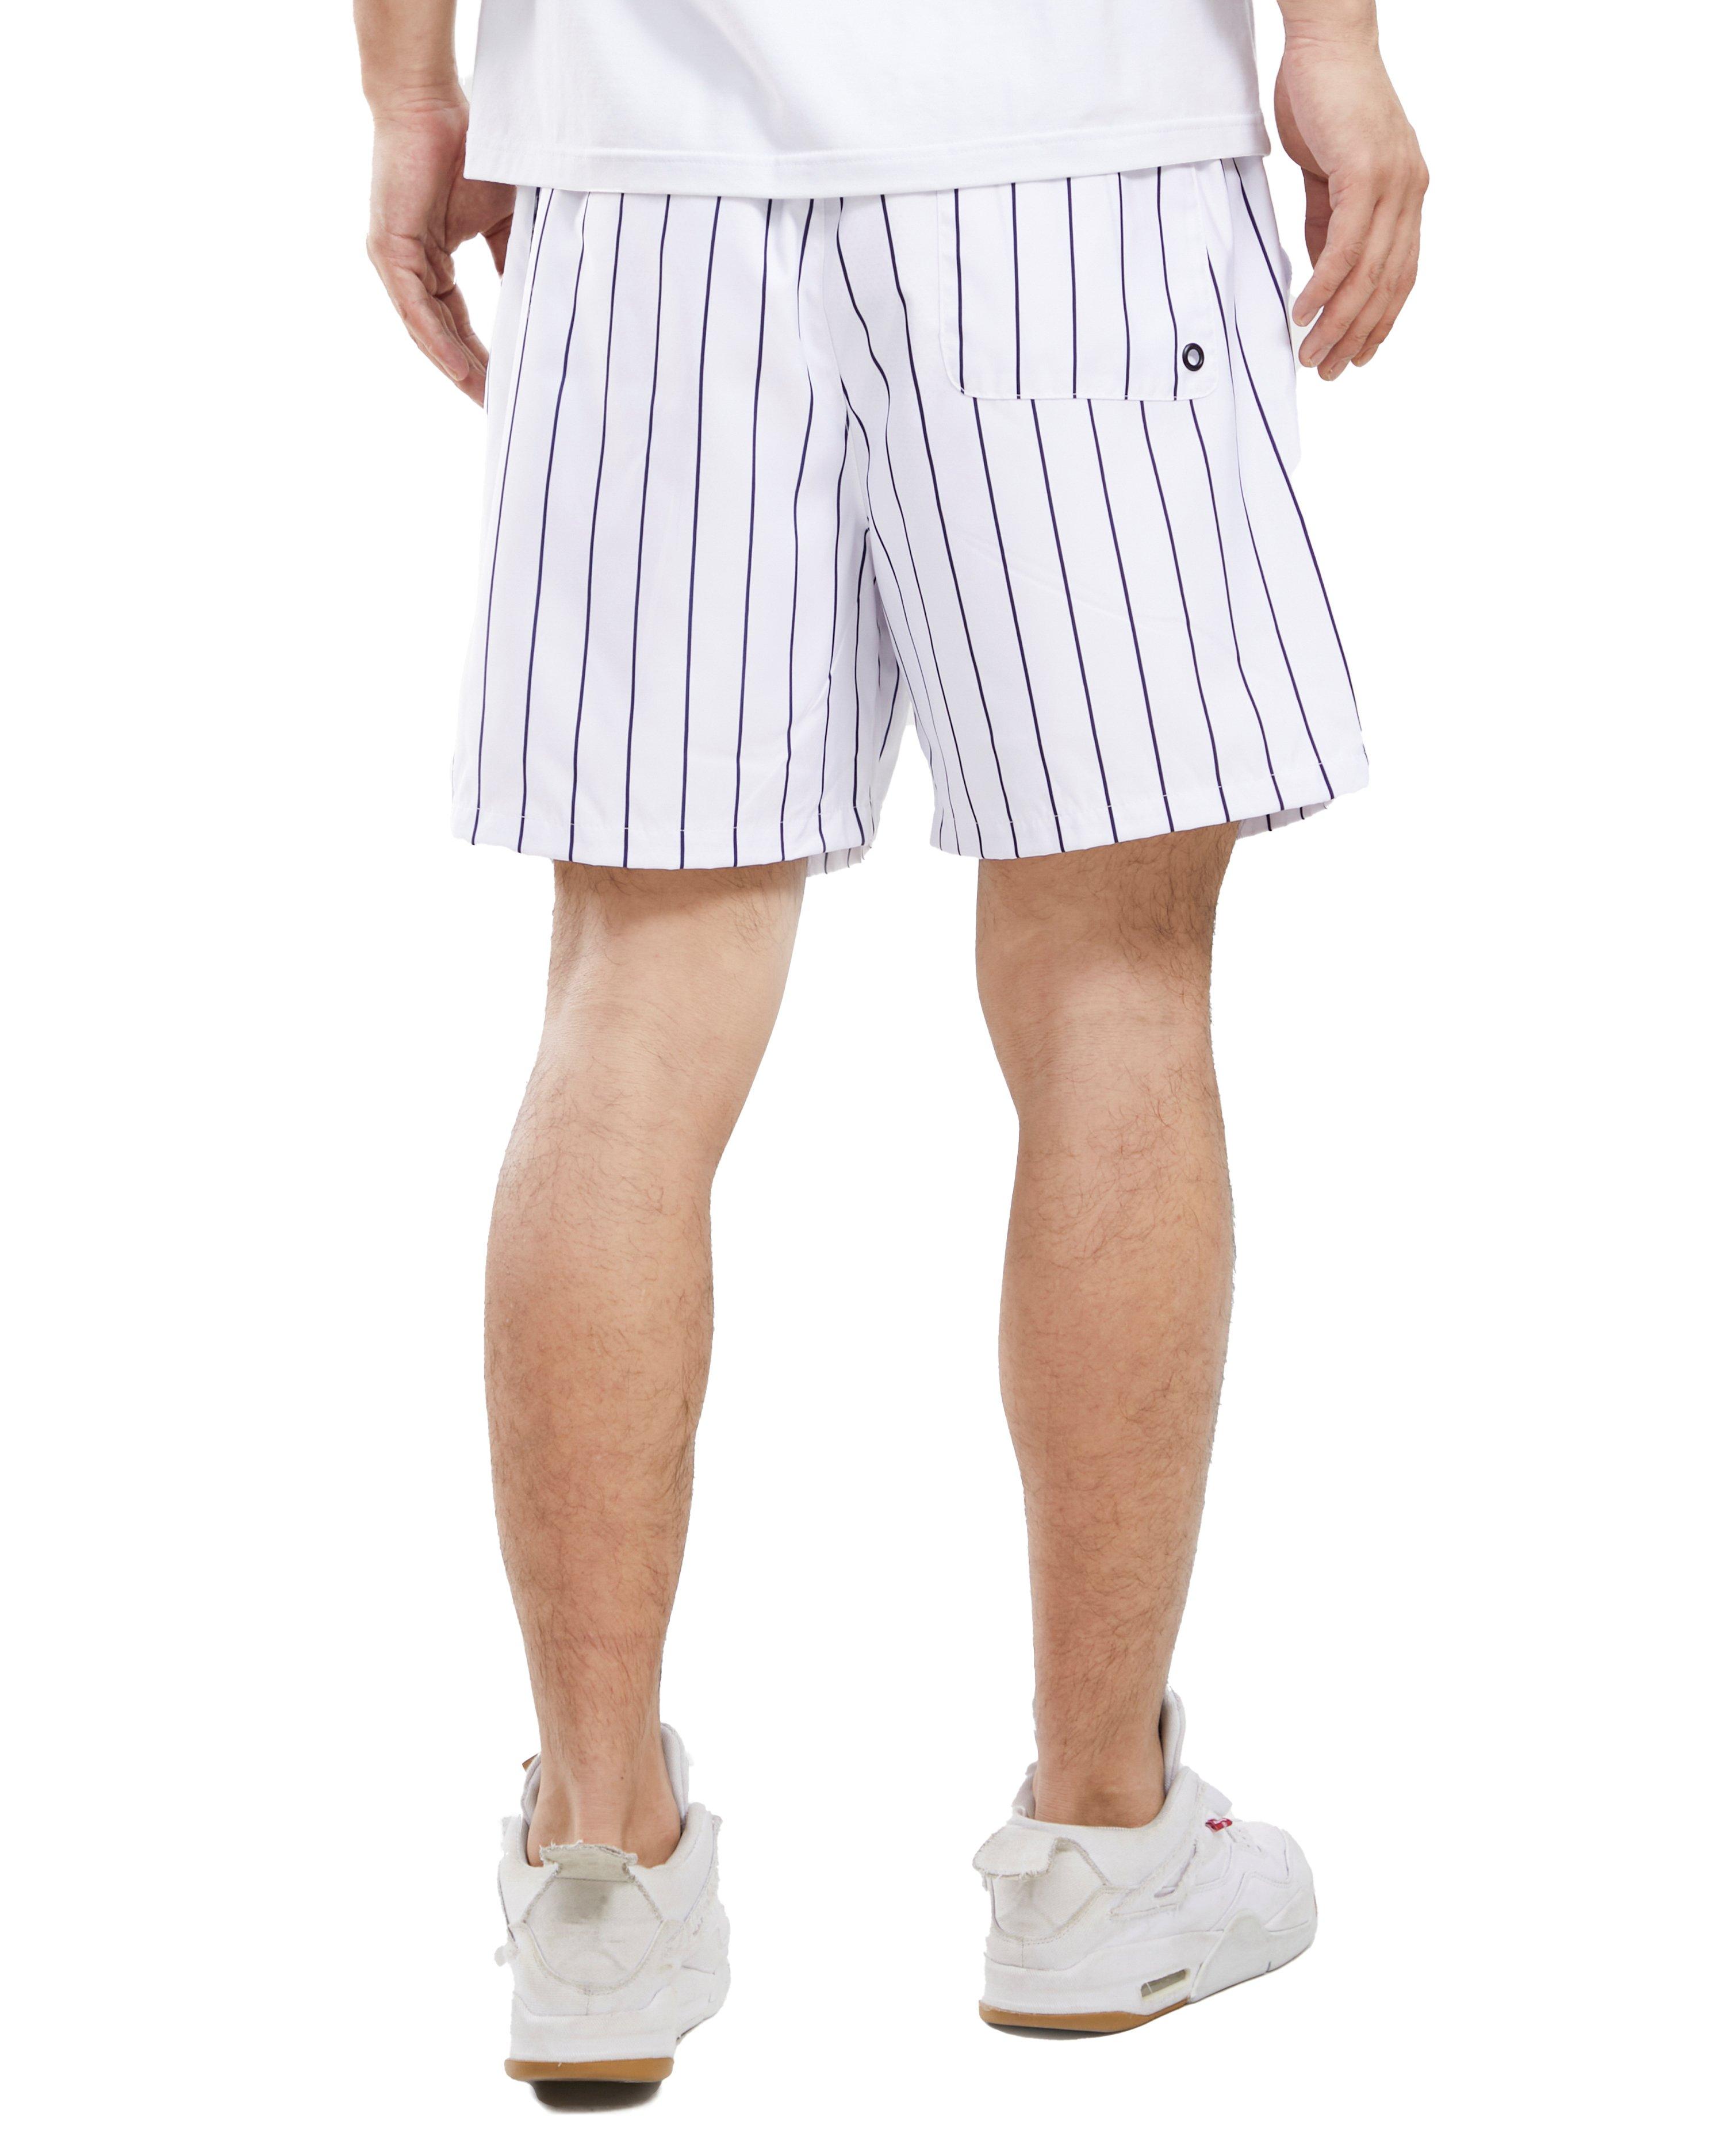 yankees pinstripe shorts